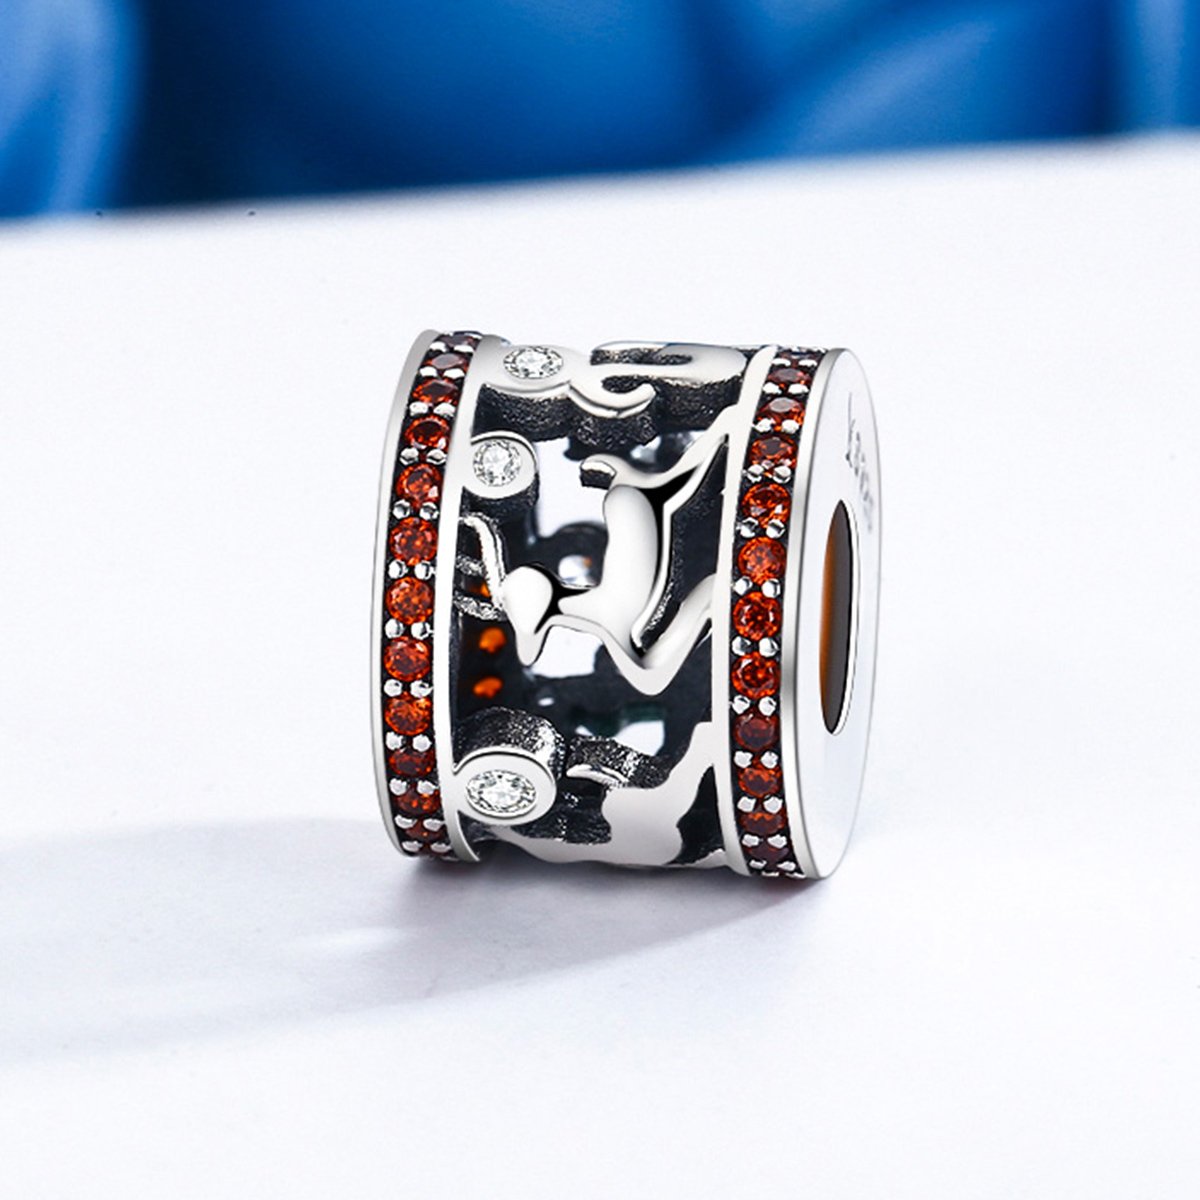 Sterling 925 silver charm the Moose bead pendant fits Pandora charm and European charm bracelet Xaxe.com